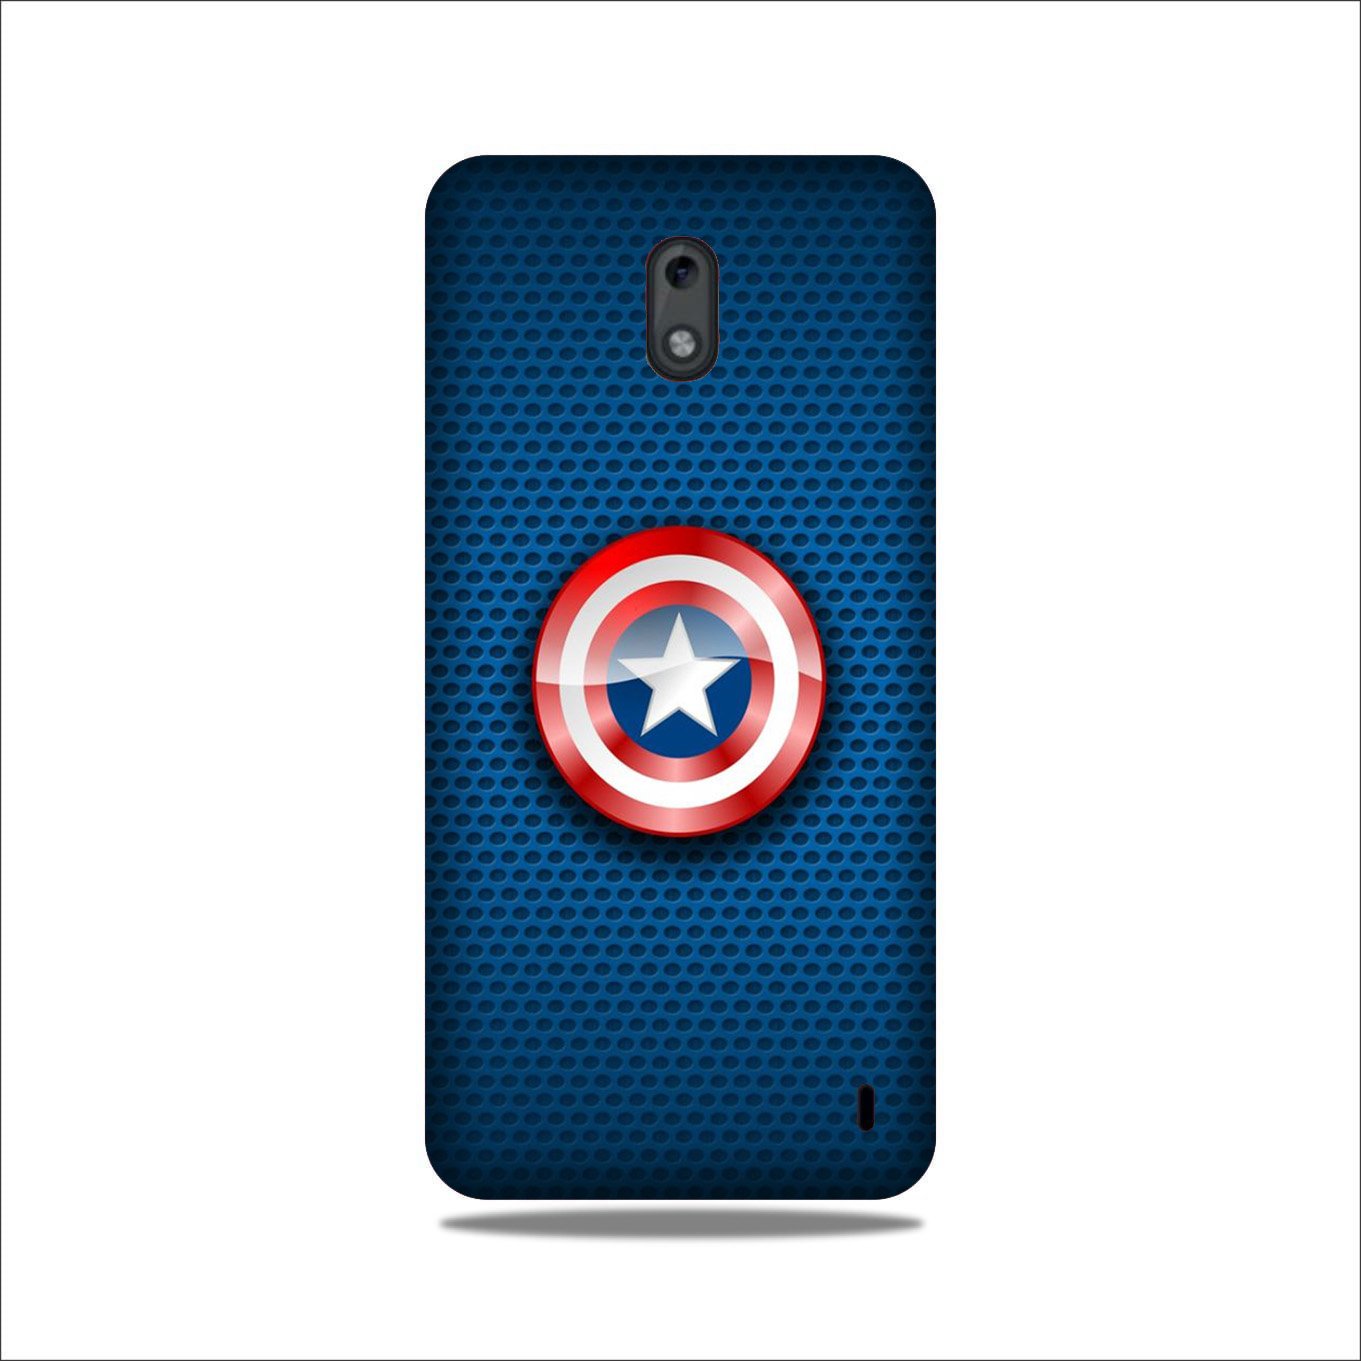 Captain America Shield Case for Nokia 2.2 (Design No. 253)